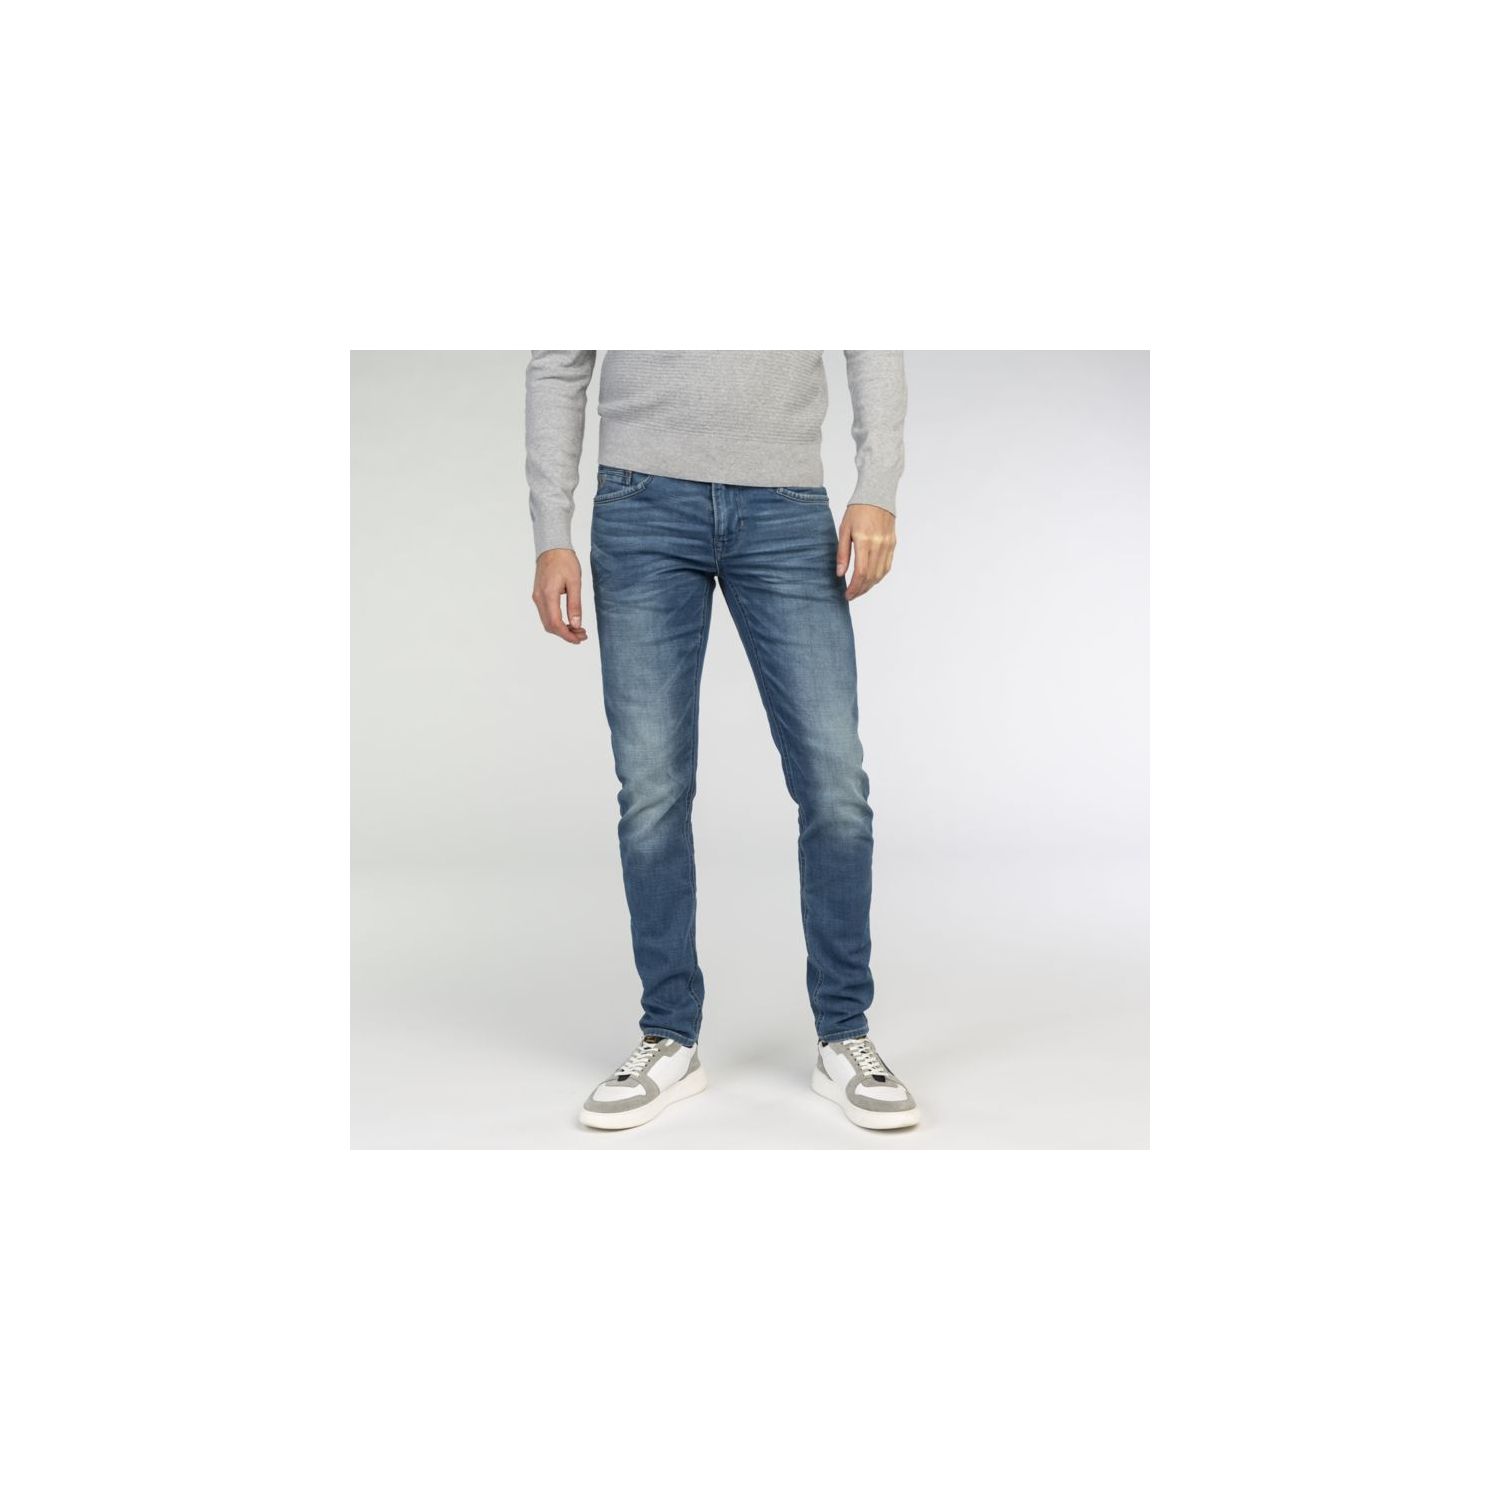 Geheim injecteren Omhoog PME Legend tailwheel jeans soft mid blue online kopen. | G-Level